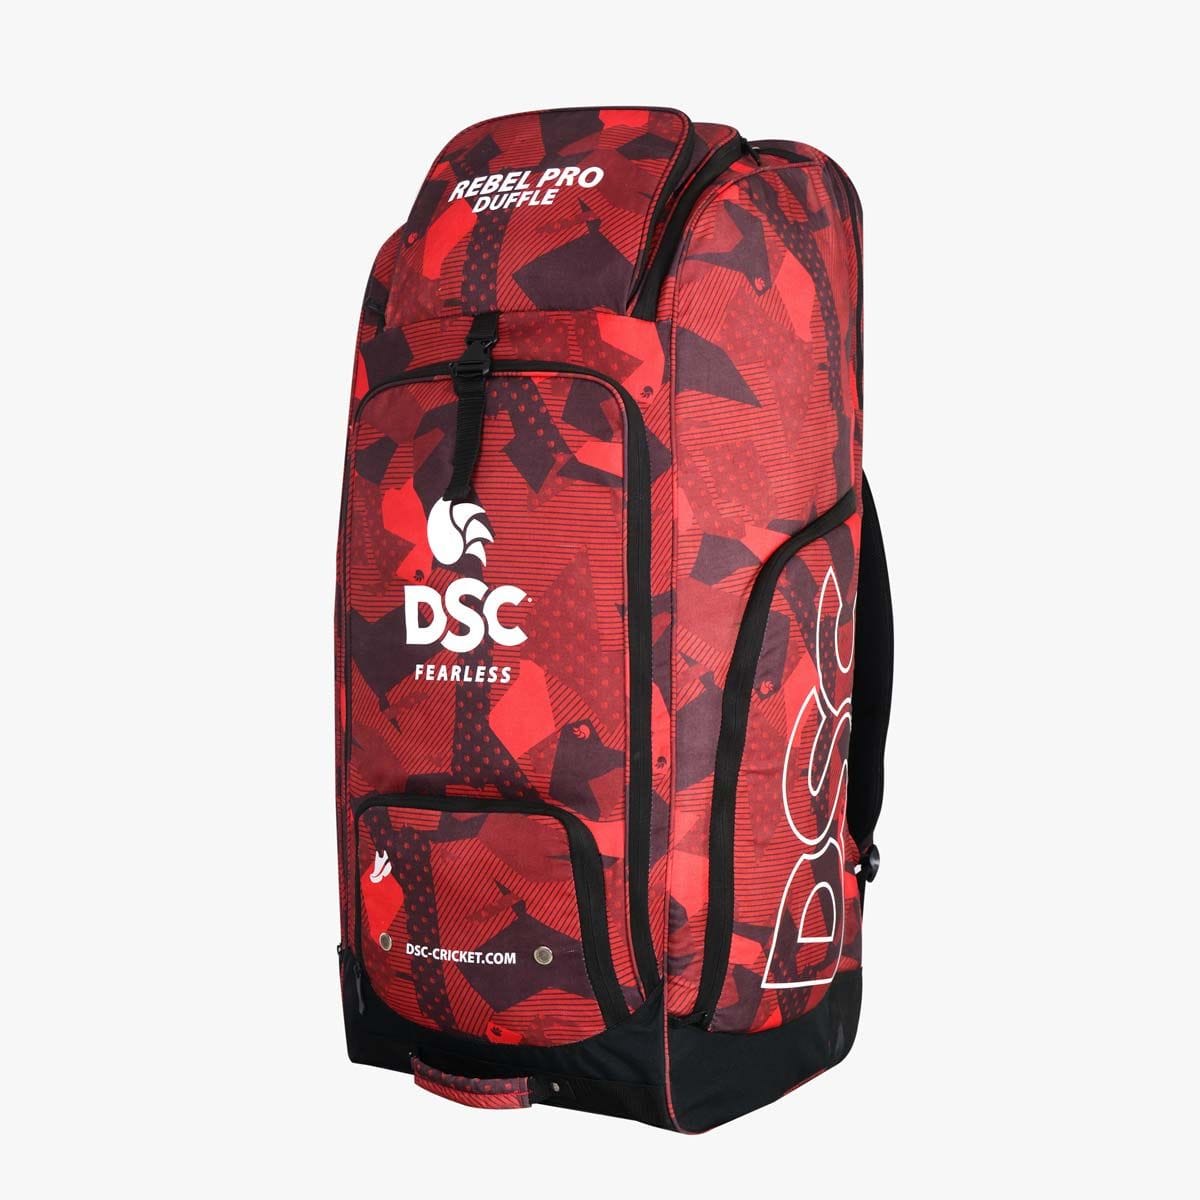 Adidas WicketKeeping DSC Rebel Pro Duffle Cricket Bag